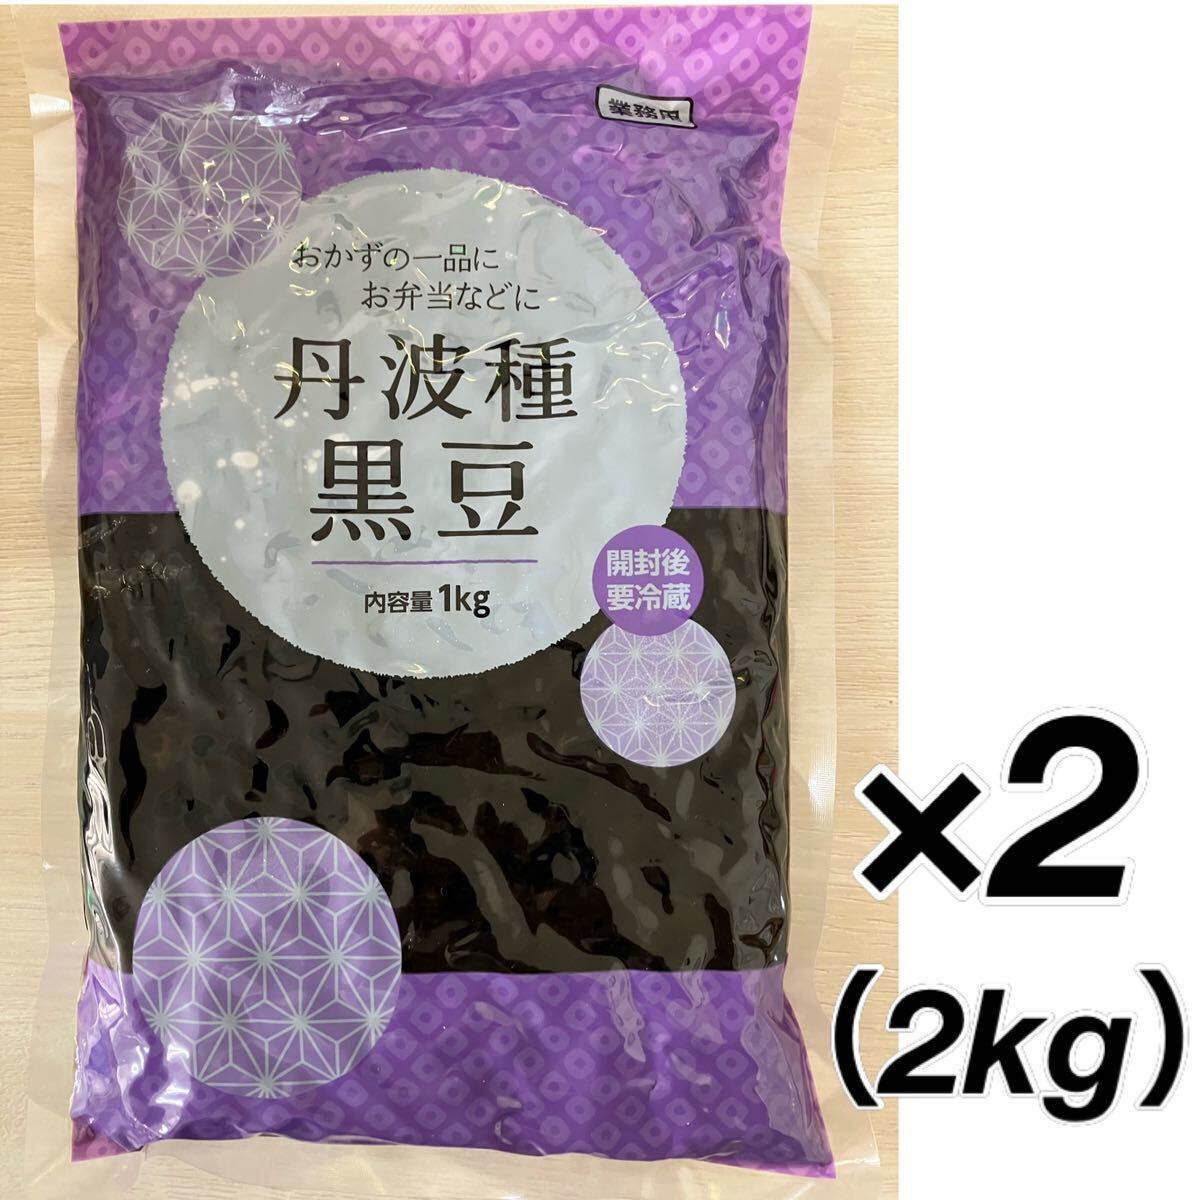  Tanba kind black soybean .2kg 1 kilo ×2 sack enough high capacity .... soft black soybean . legume chopsticks .. small bowl .. present daily dish ... one goods side dish .. osechi-ryōri 